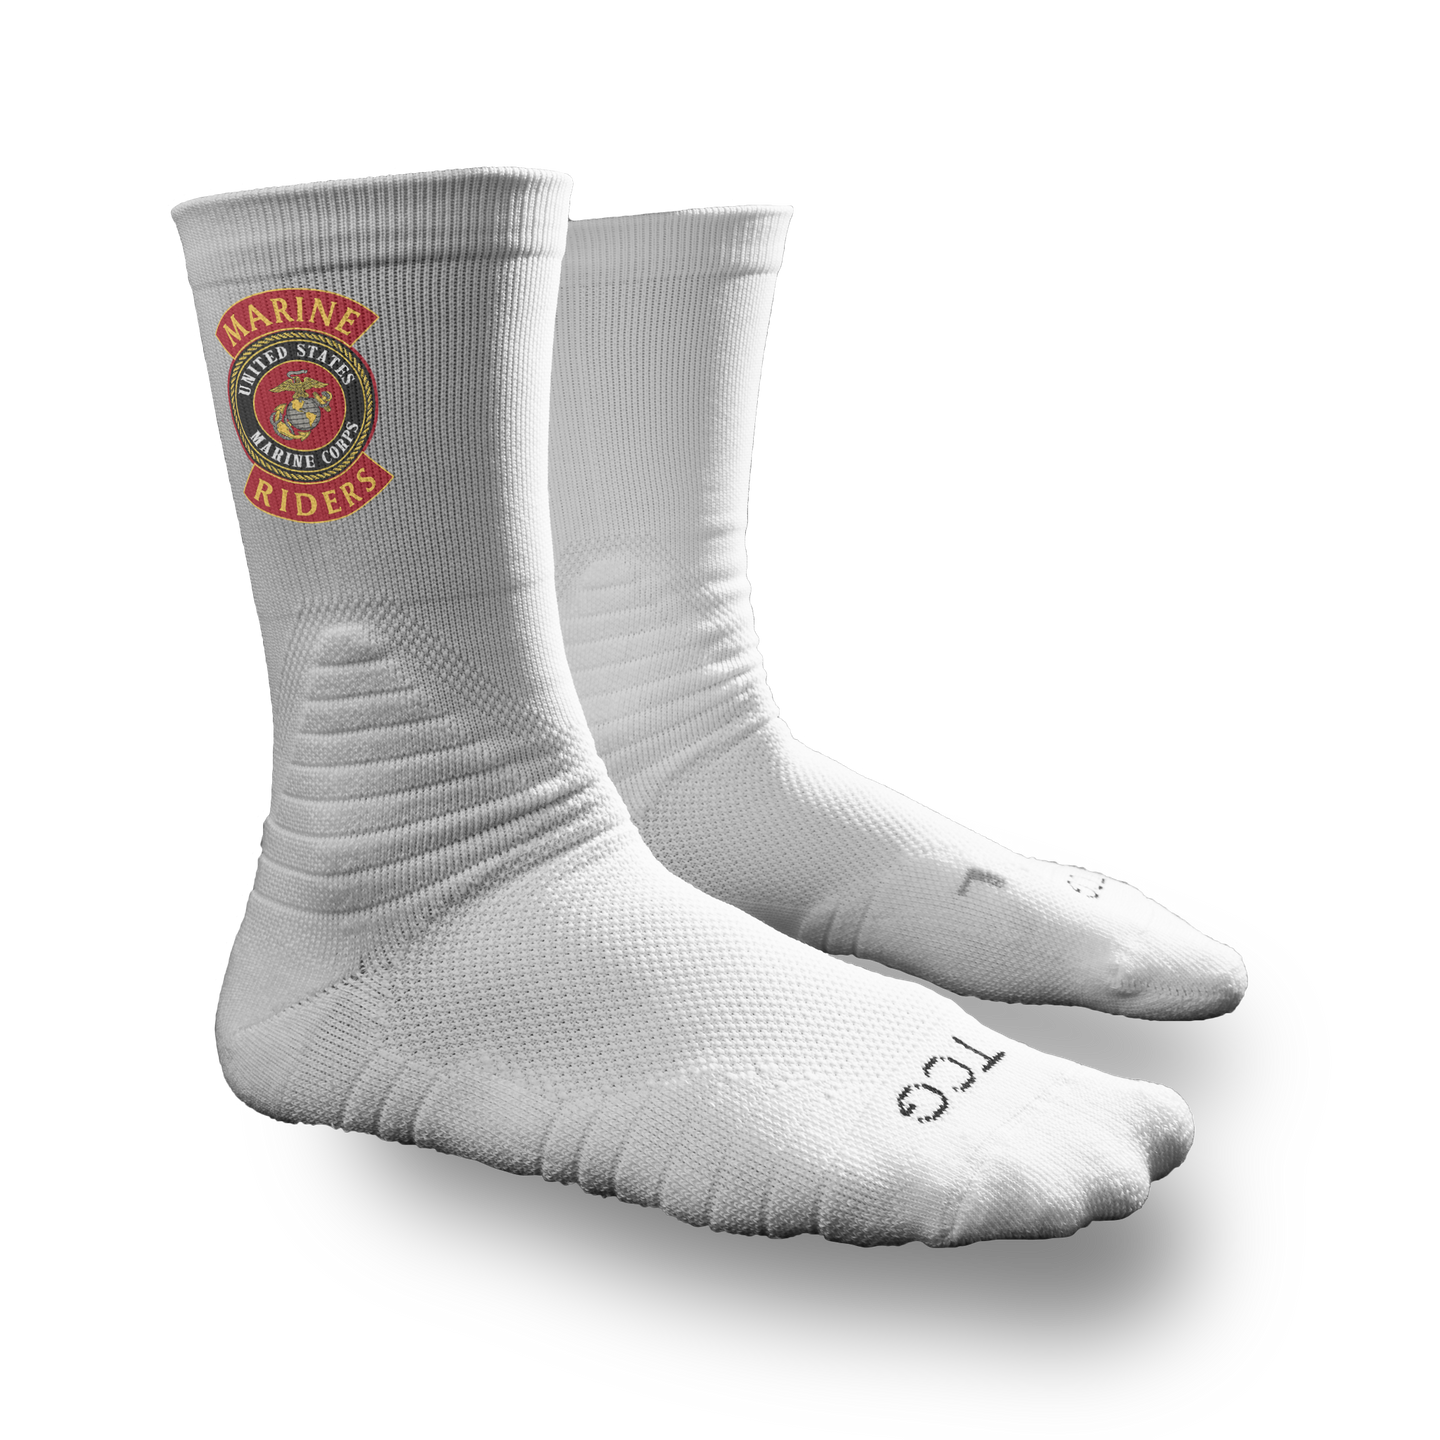 Marine Riders Premium Athletic Socks